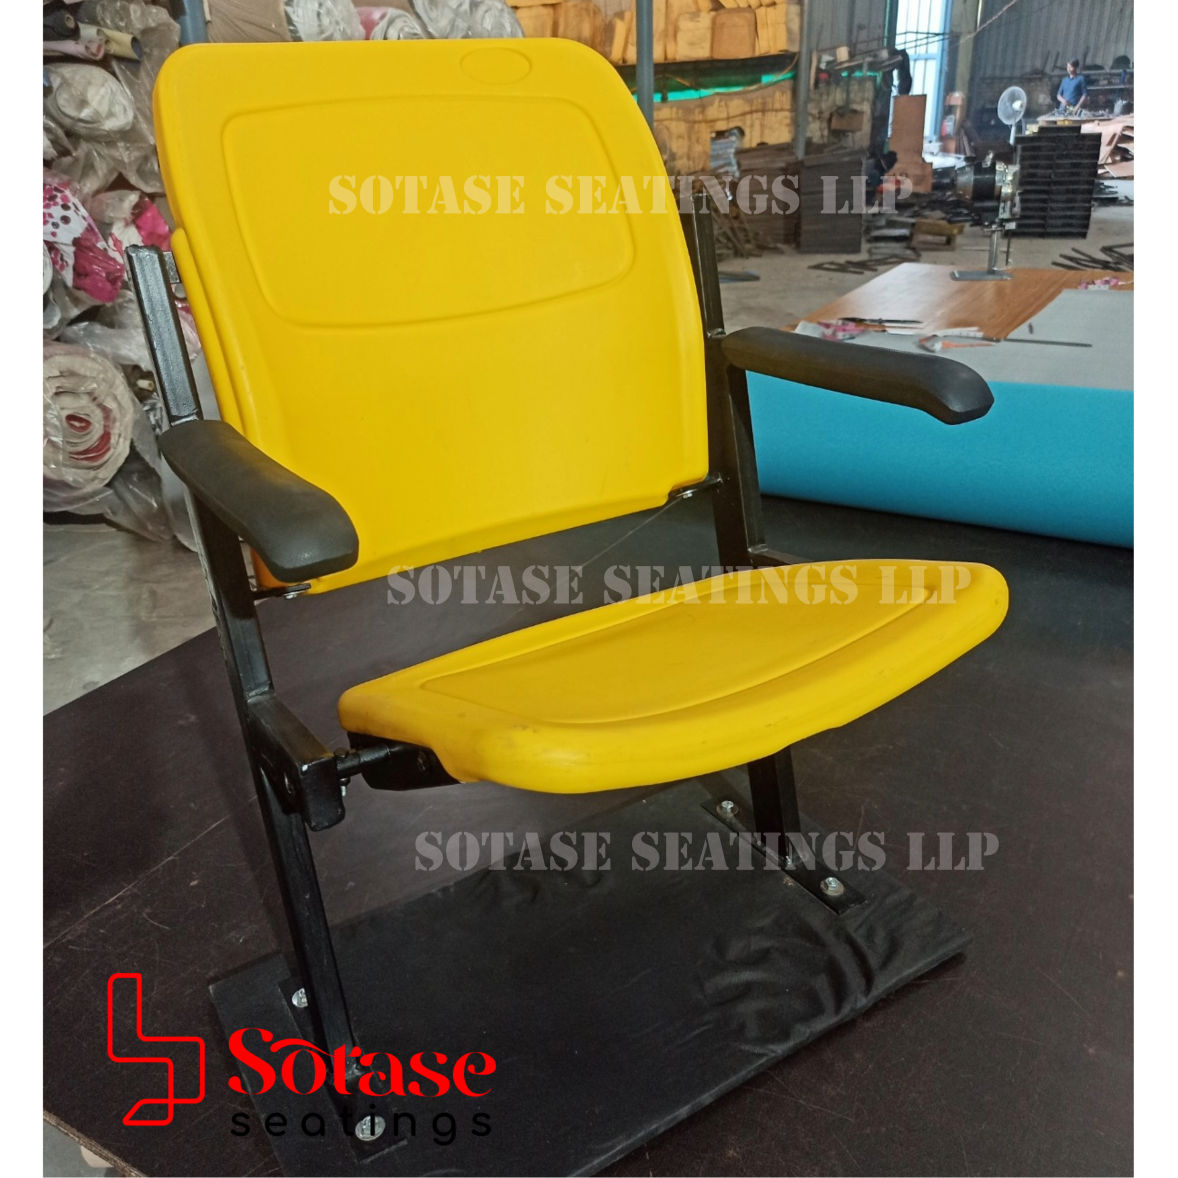 Sotase Tip-Up Stadium Chair